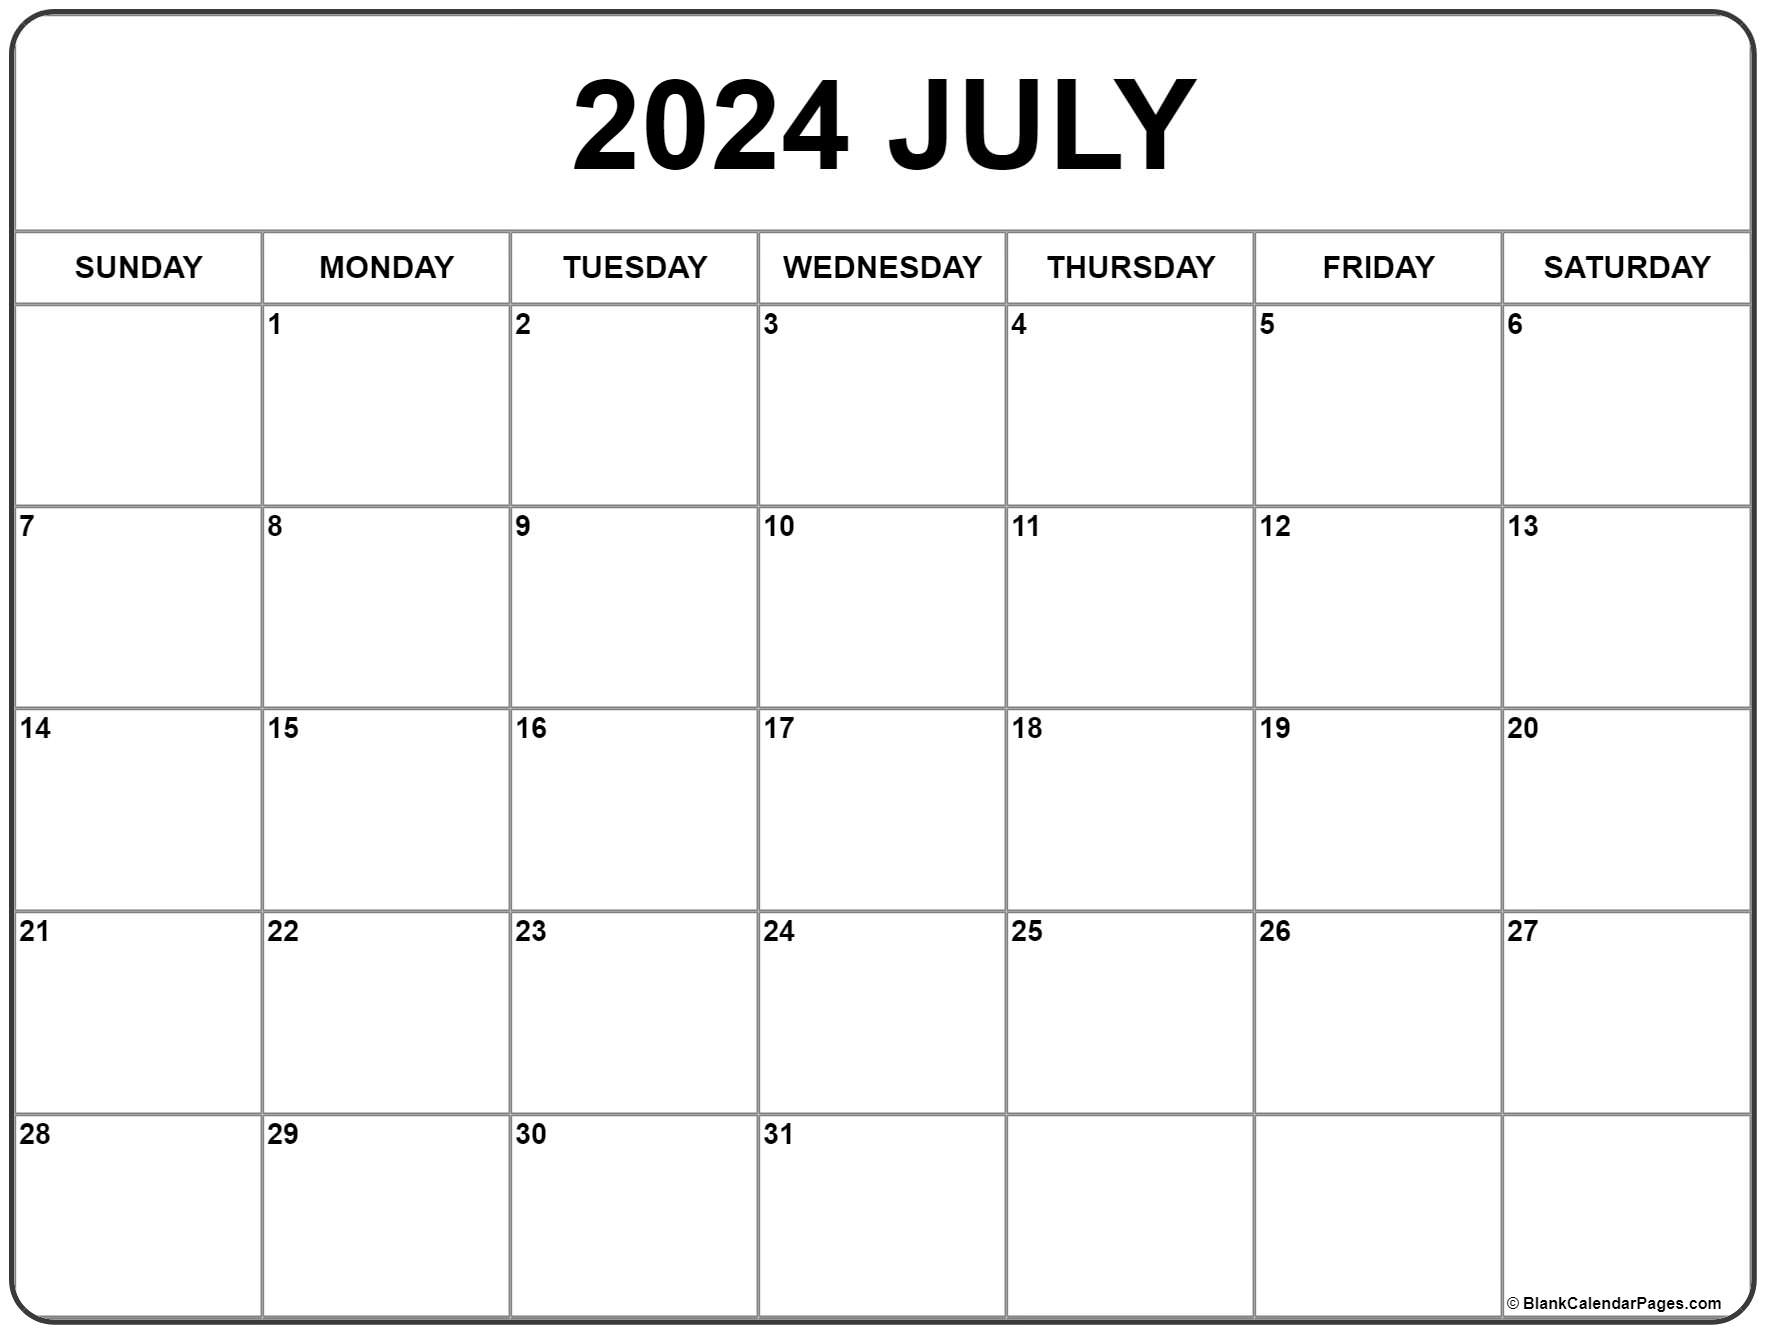 July 2024 Calendar | Free Printable Calendar throughout Free Printable July 2024 Calendar